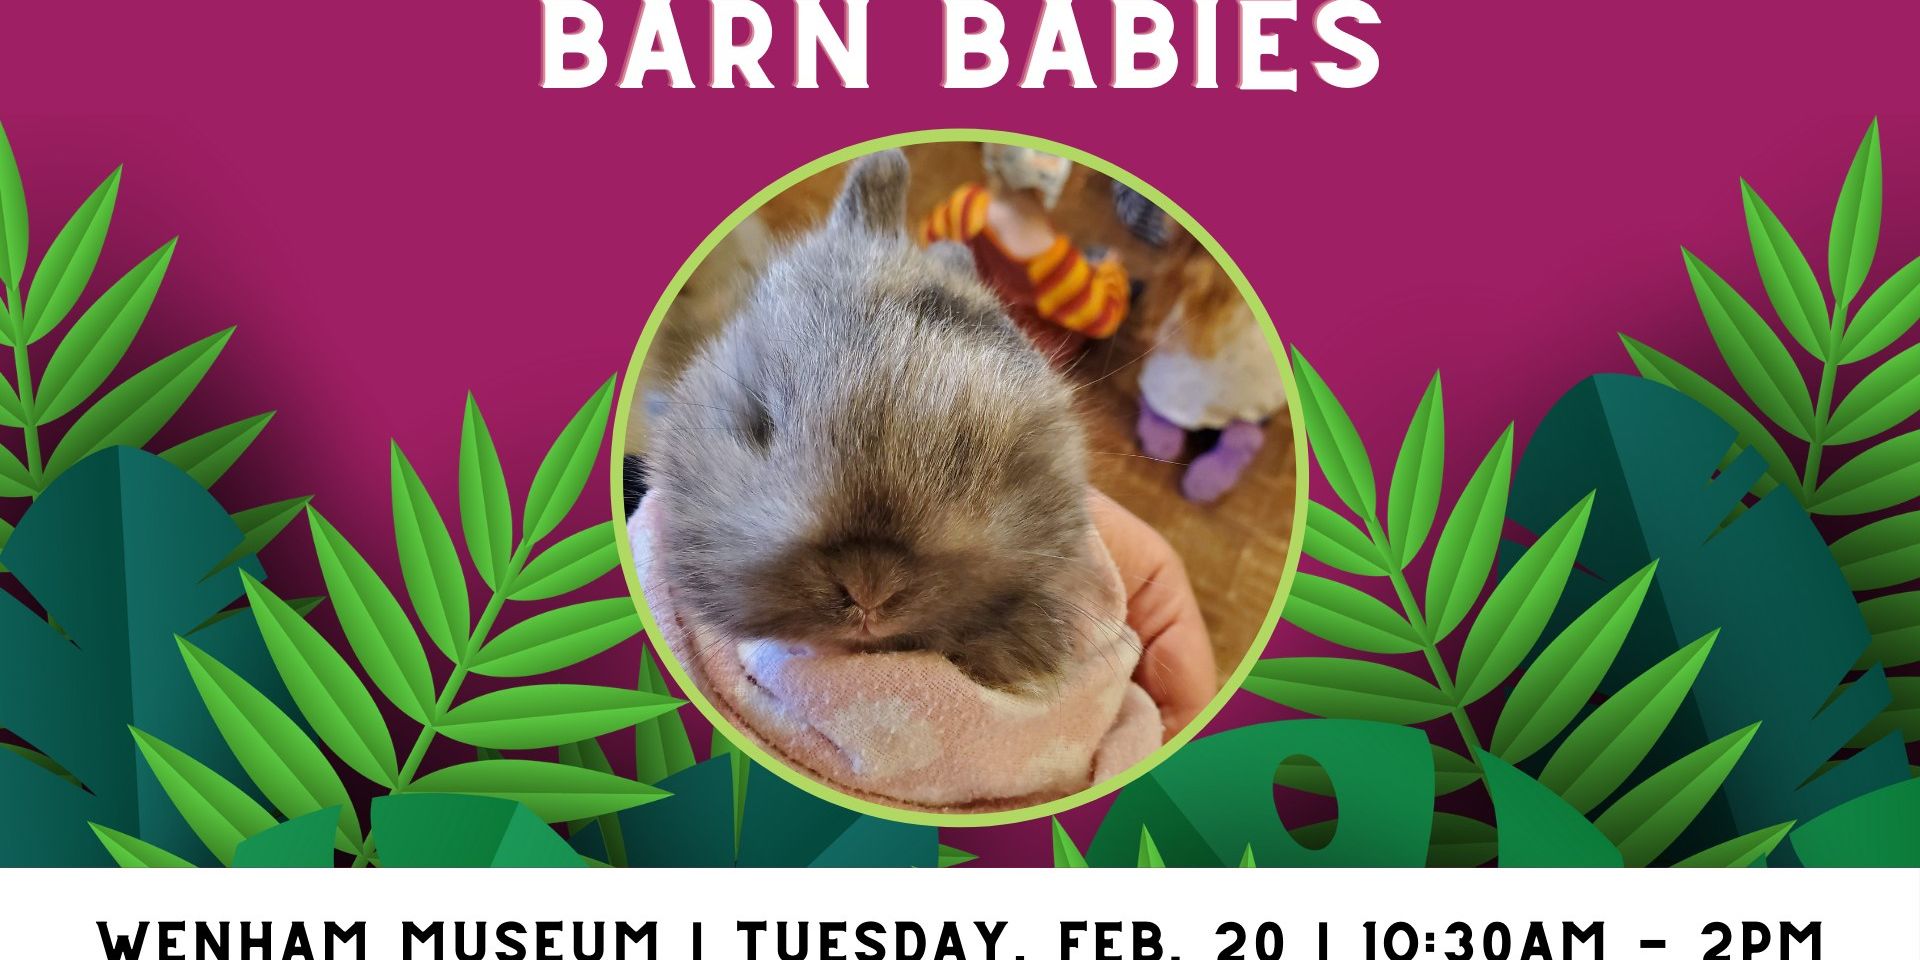 Barn Babies promotional image